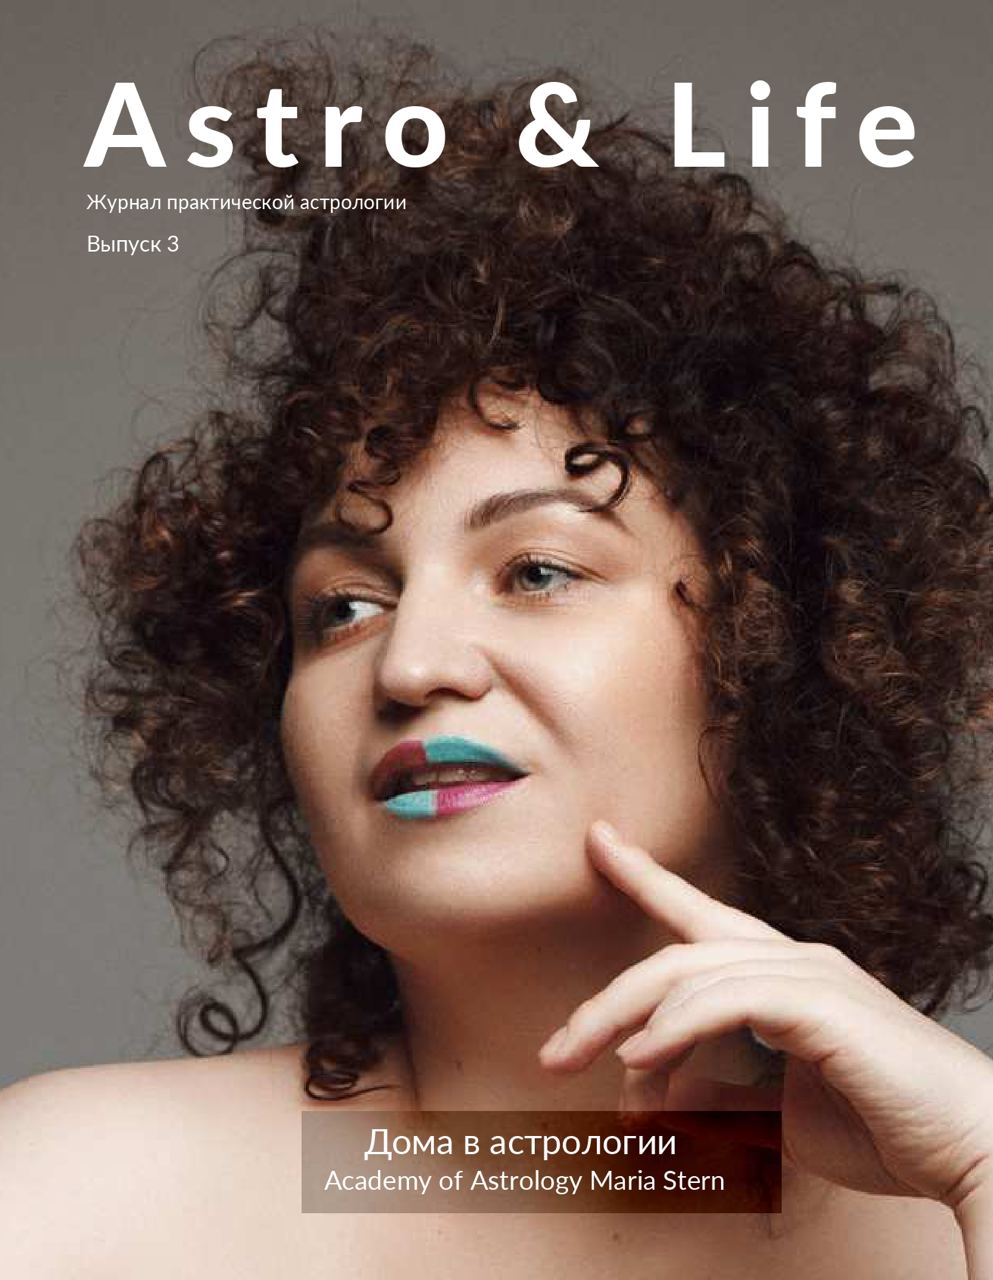 Maria life. Журнал Астро и лайф.